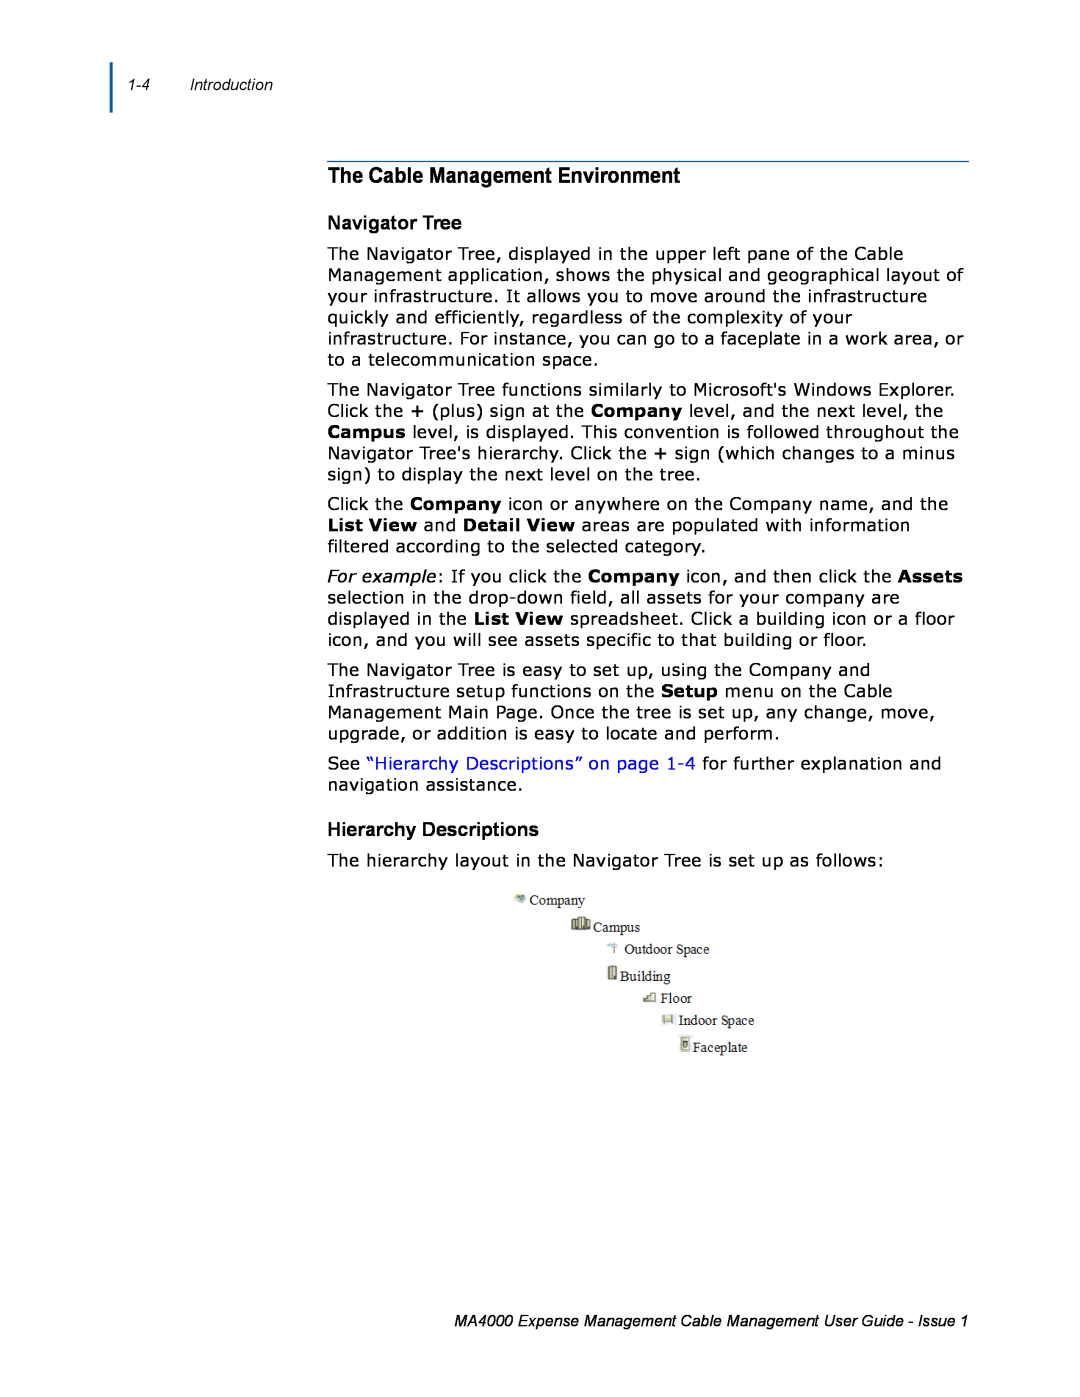 NEC MA4000 manual The Cable Management Environment, Navigator Tree, Hierarchy Descriptions 